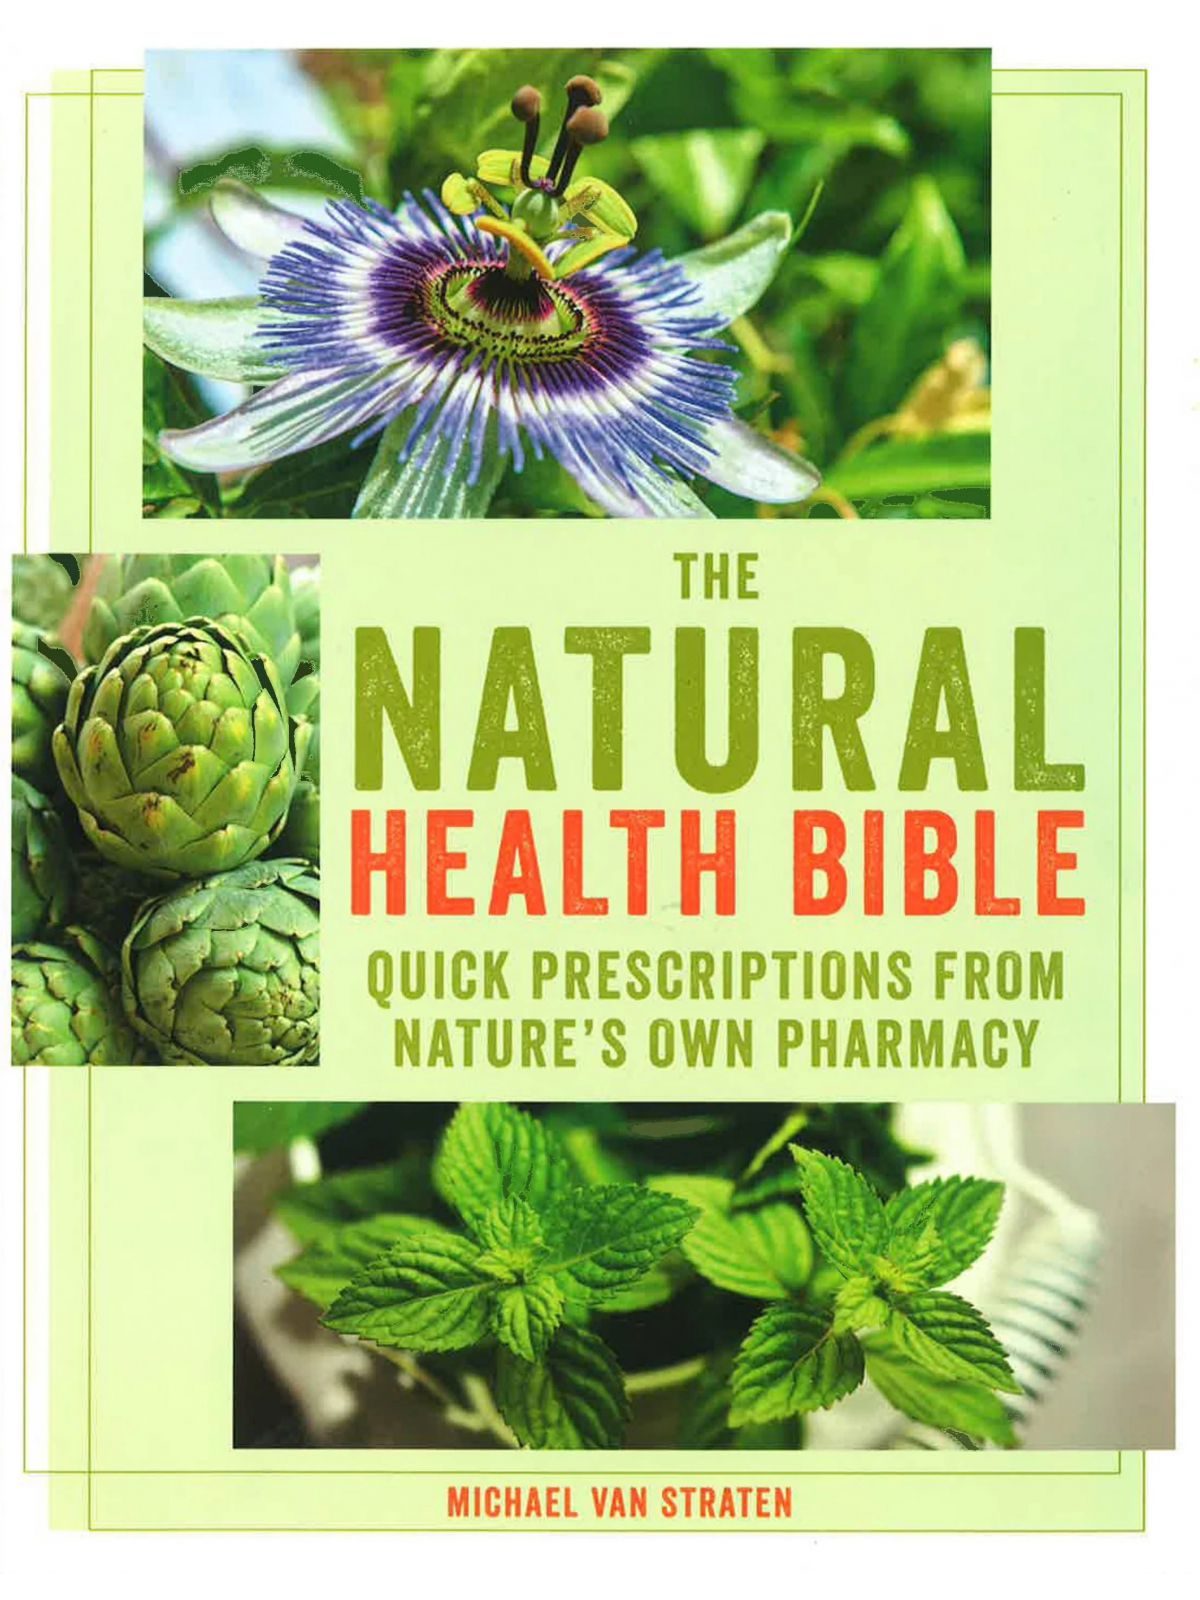 NATURAL HEALTH BIBLE  Купить Книгу на Английском